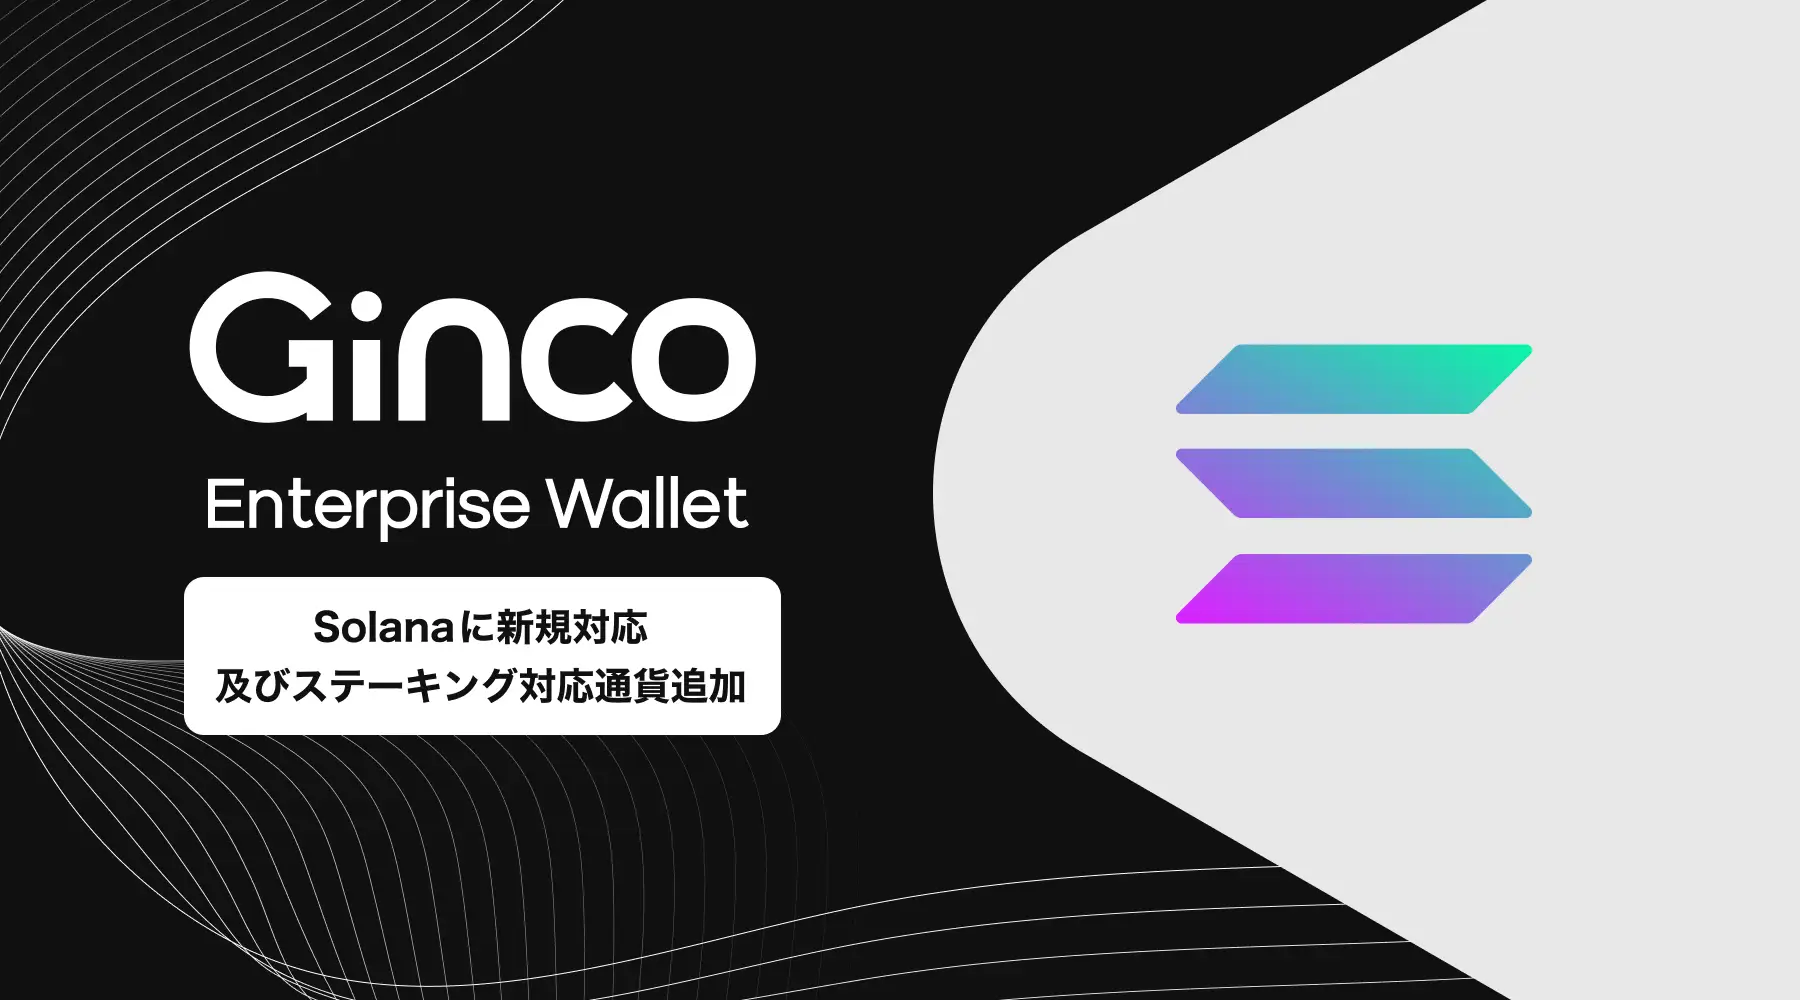 Ginco Enterprise Wallet、Solanaに新規対応およびステーキングサービスの開始